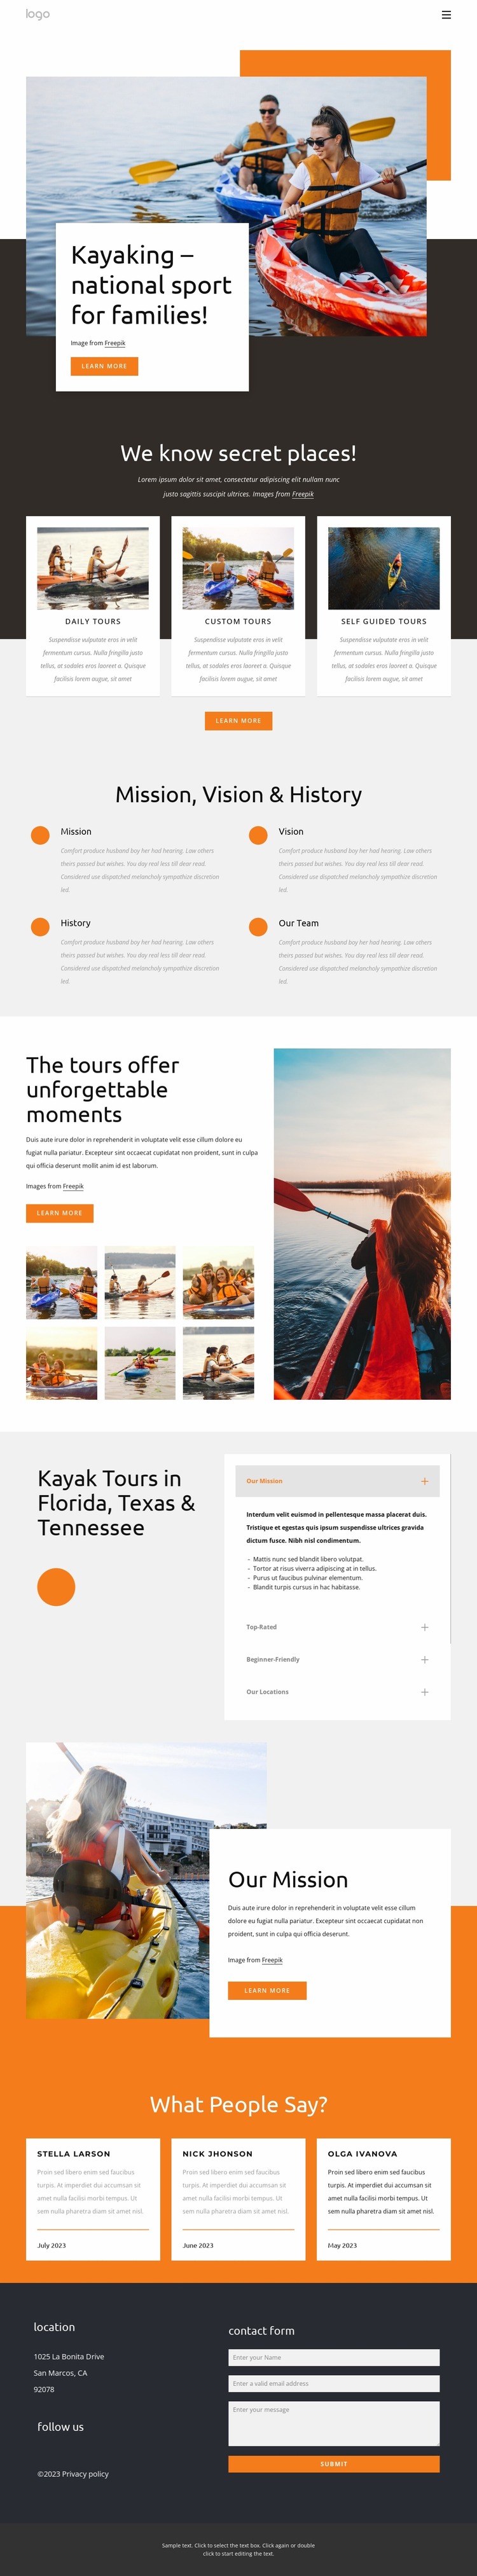 Kayaking - national sport for families Html Website Builder